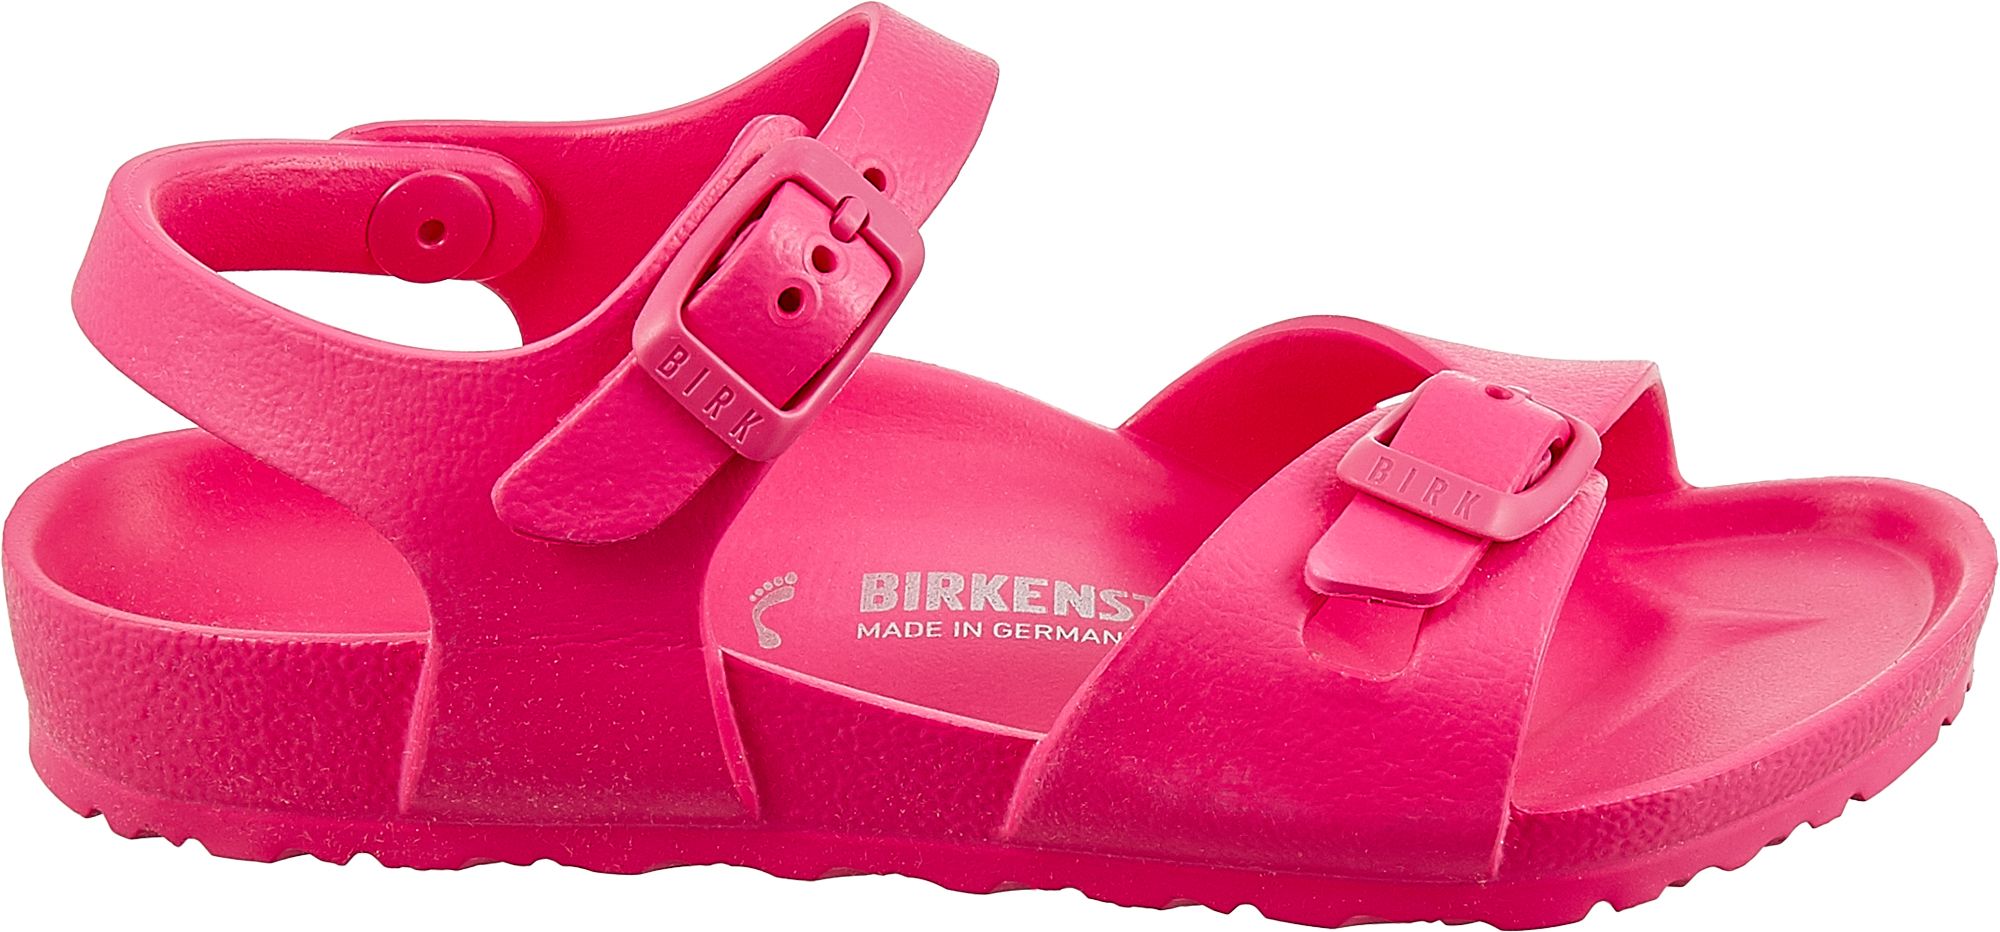 birkenstock sandals for kids